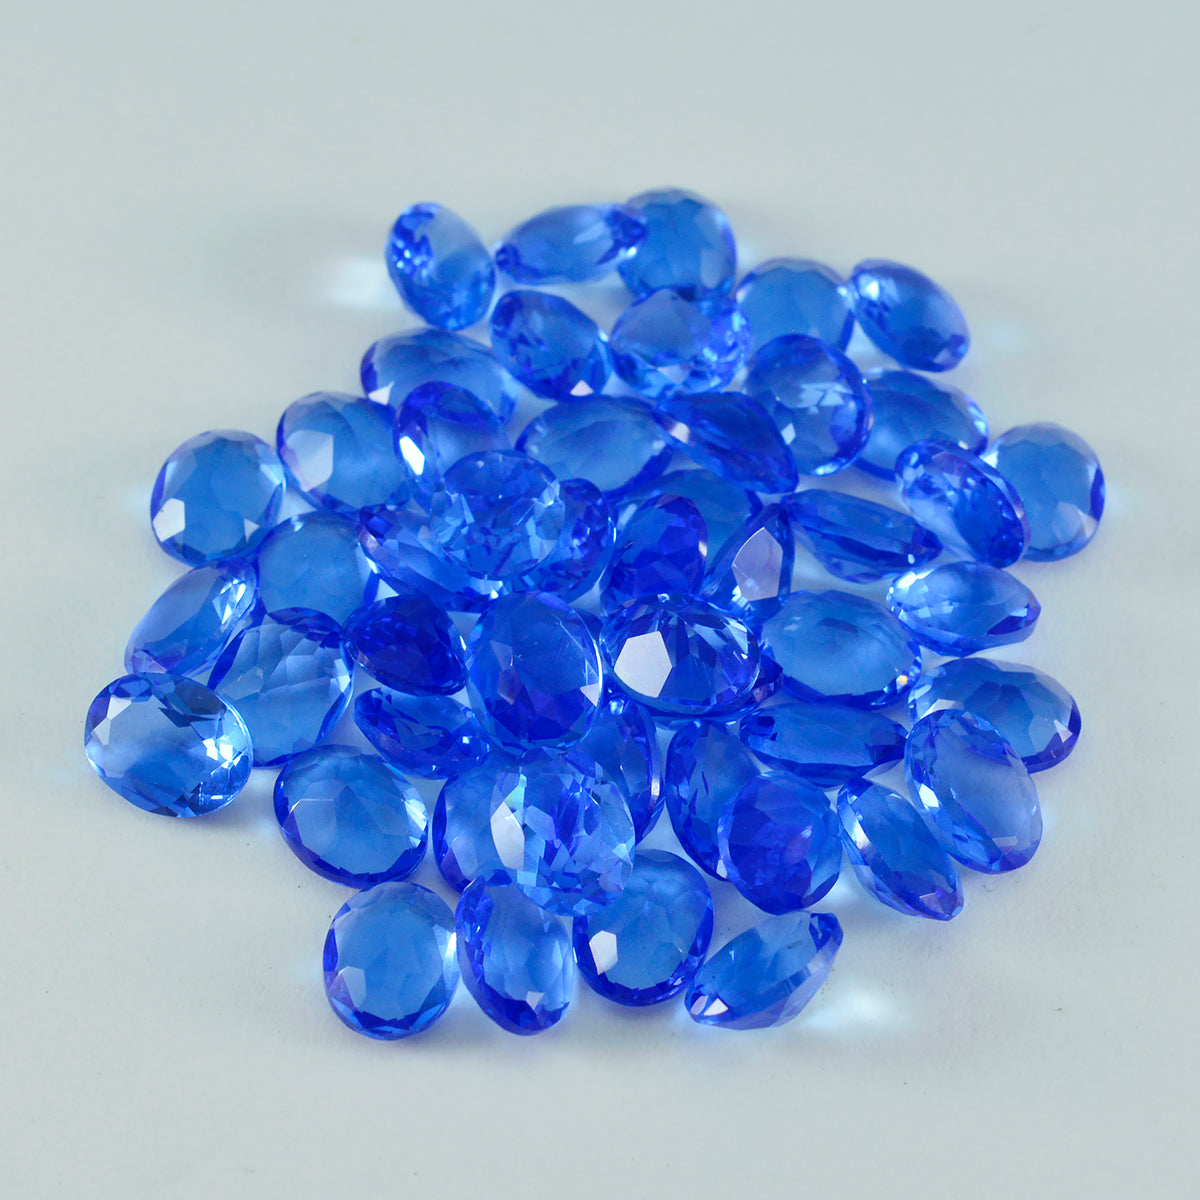 riyogems 1pc ブルー サファイア CZ ファセット 3x5 mm 楕円形 AA 品質ルース宝石